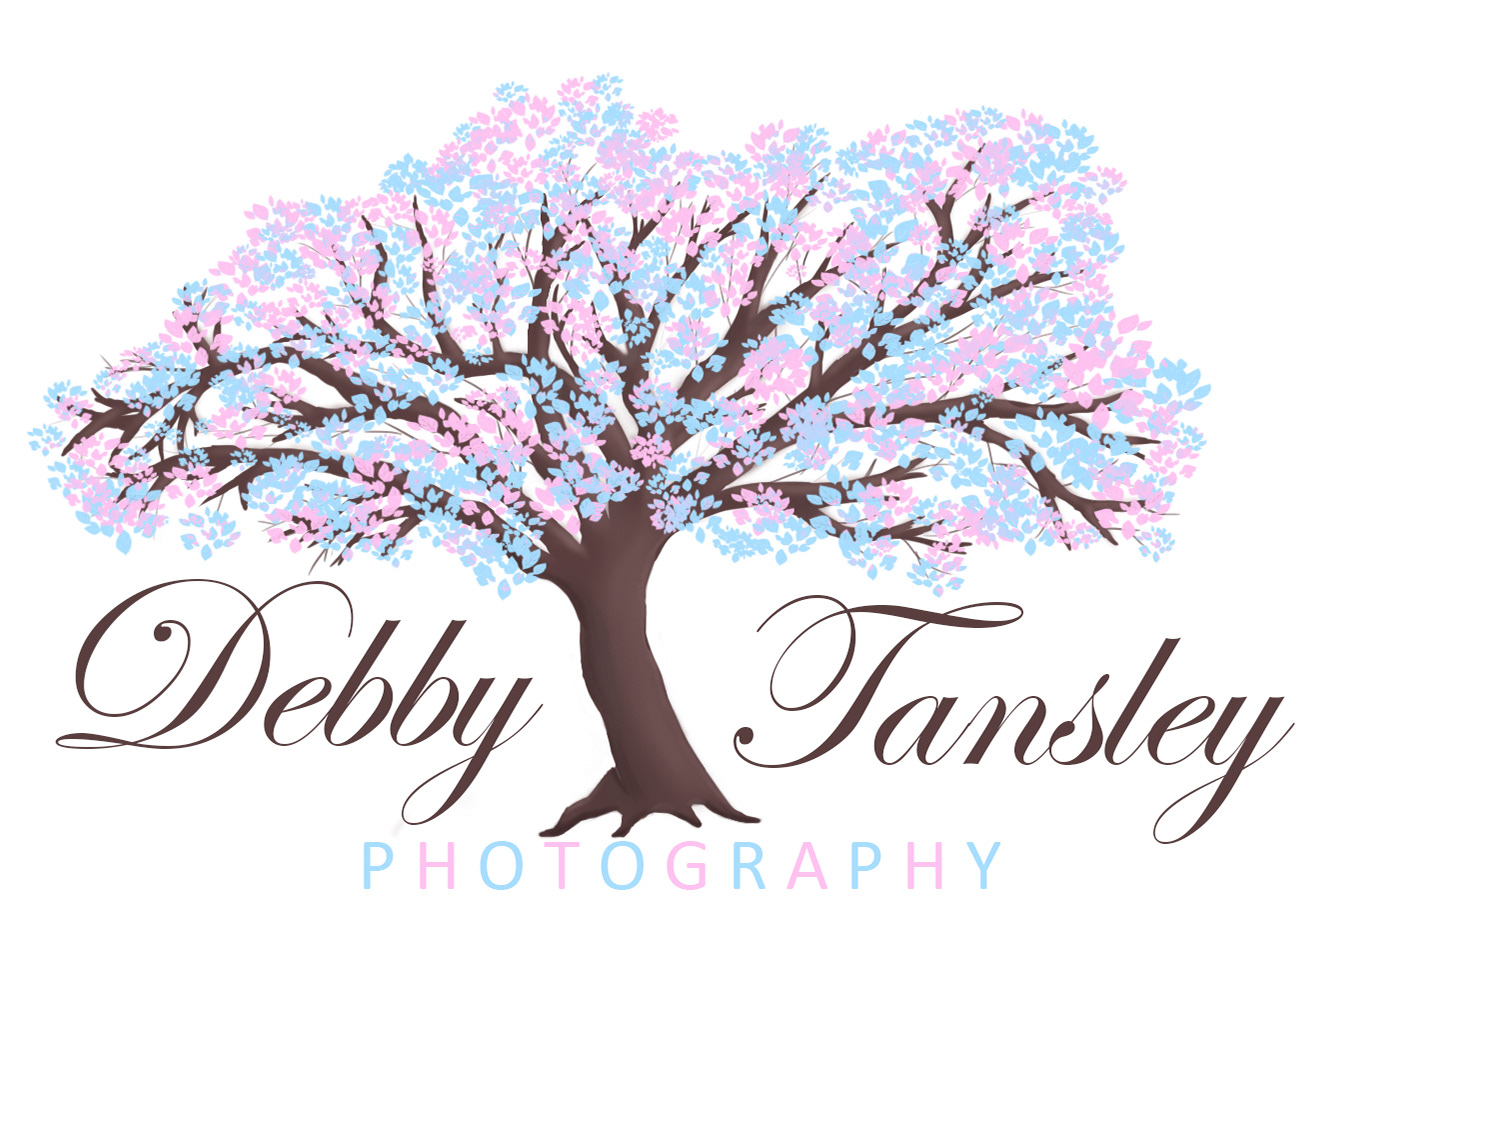 Debby Tansley